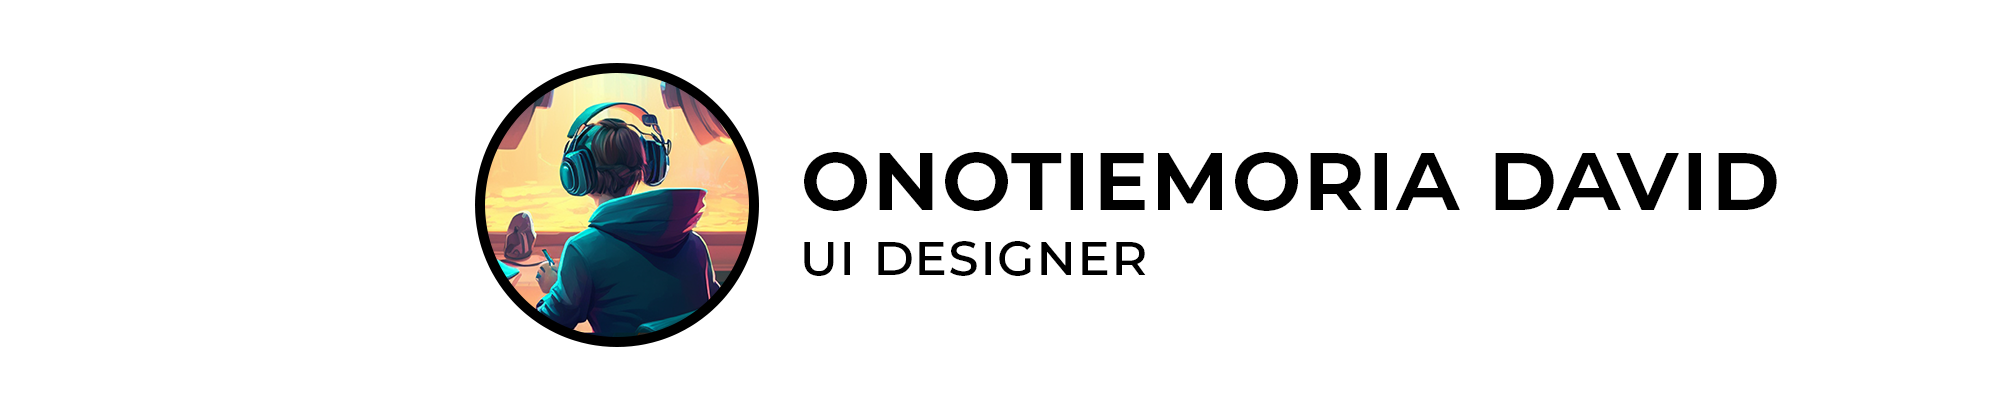 David Onotiemoria's profile banner